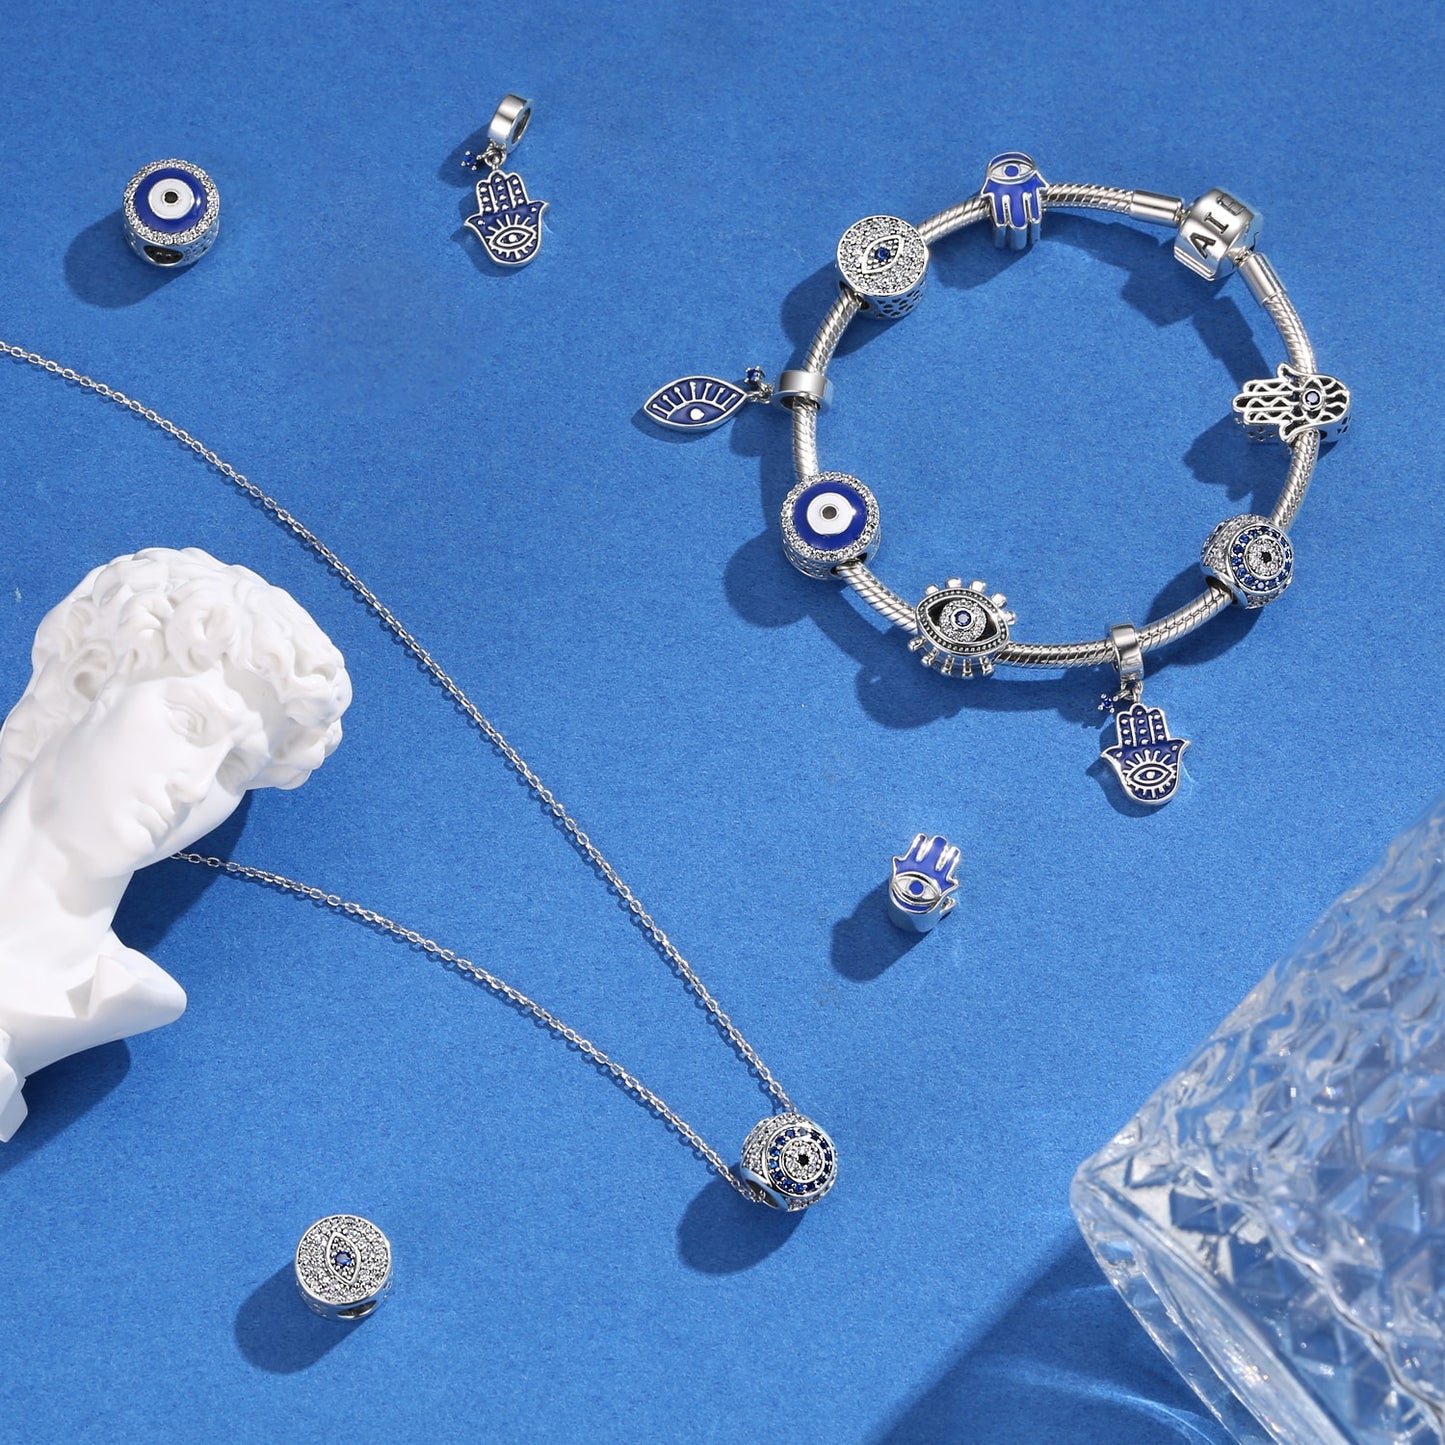 Fashion 925 Sterling Silver Colorful Blue and White Enamel Eye CZ Beads Fit Original JIUHAO Charm Bracelet Jewelry Making 2021